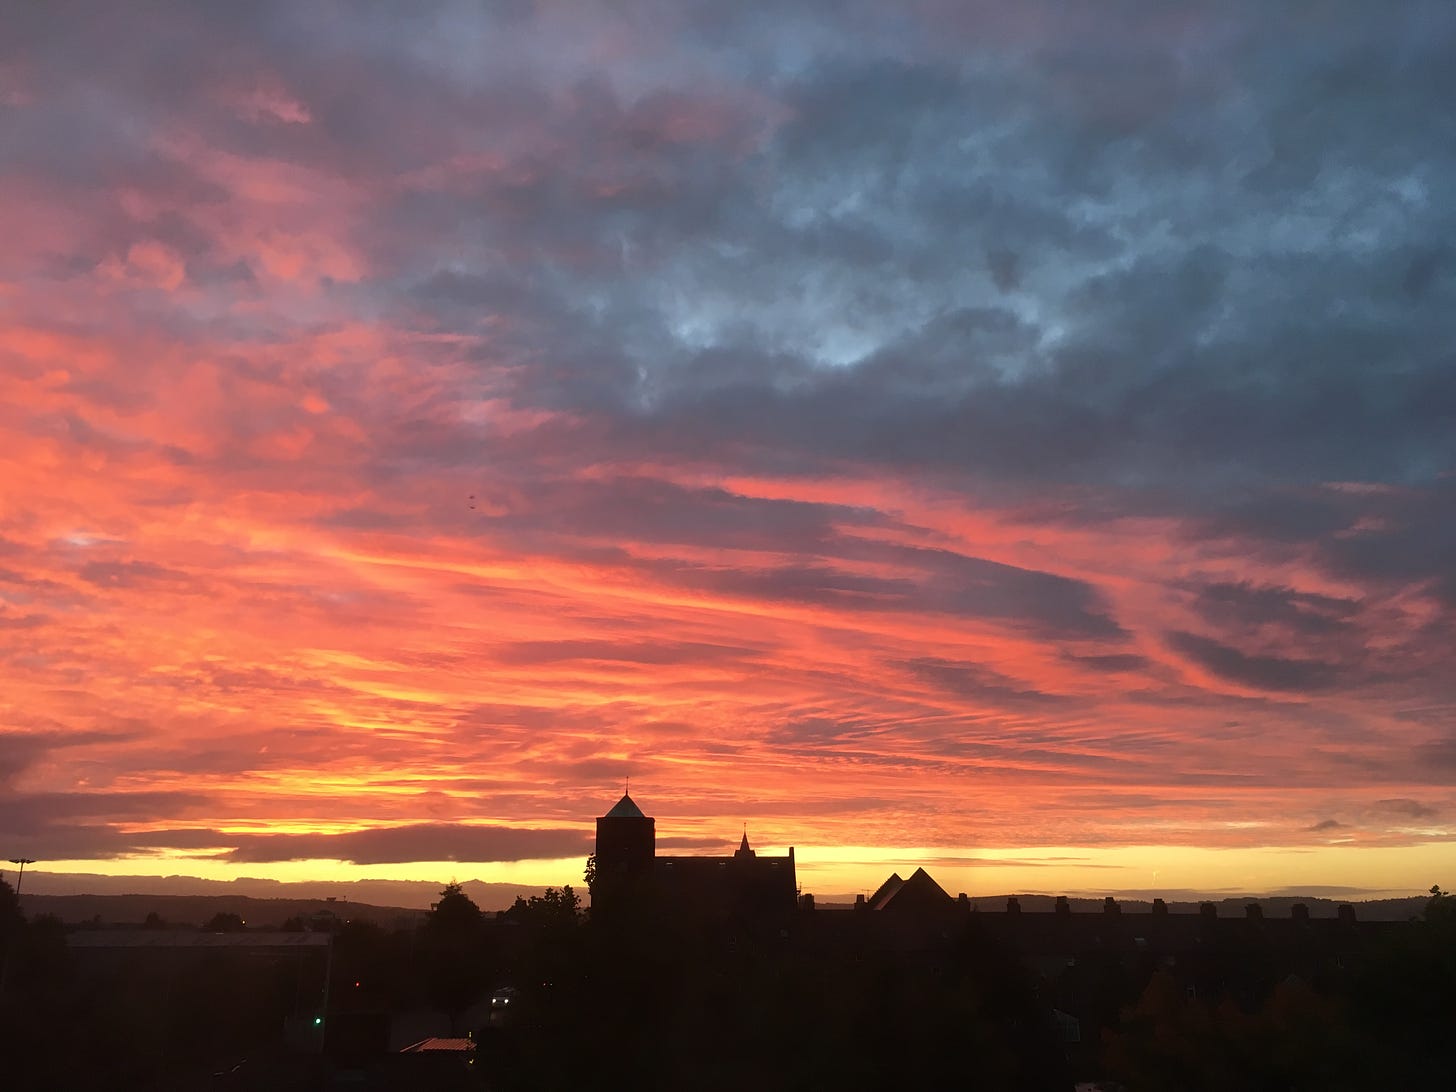 Photograph of a brilliant orange sunrise filling the sky over a steeple